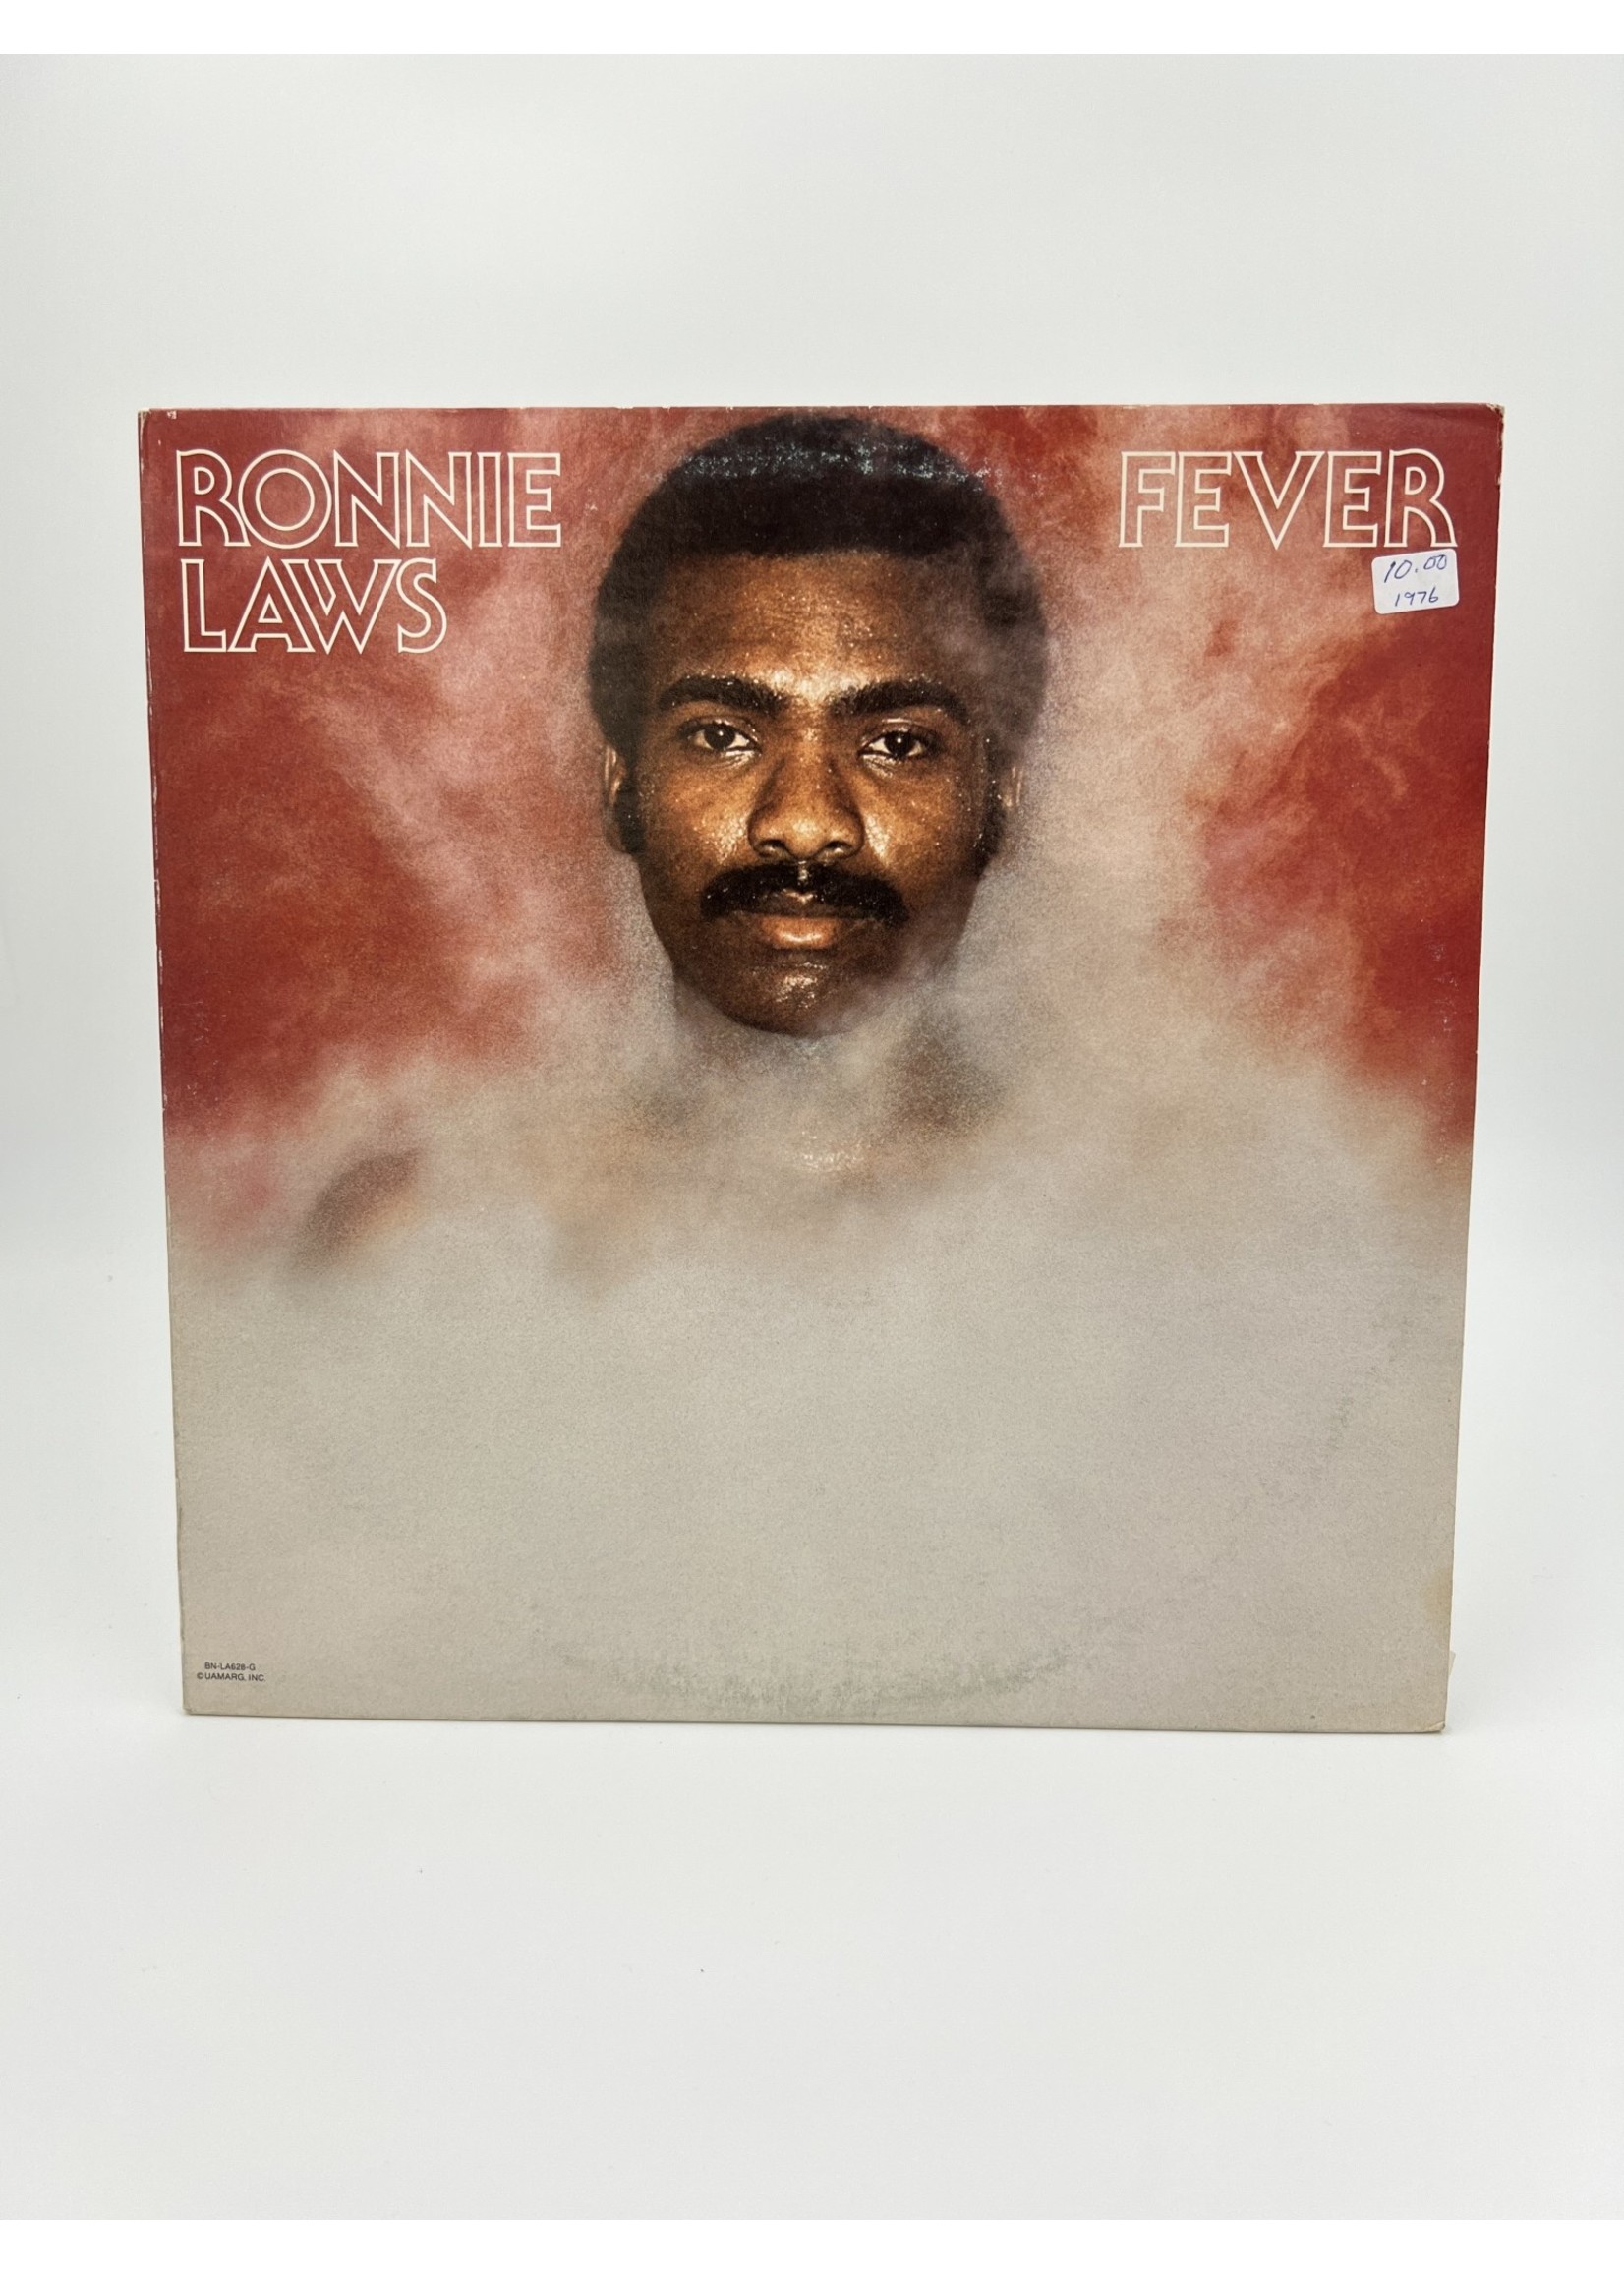 LP Ronnie Laws Fever LP RECORD